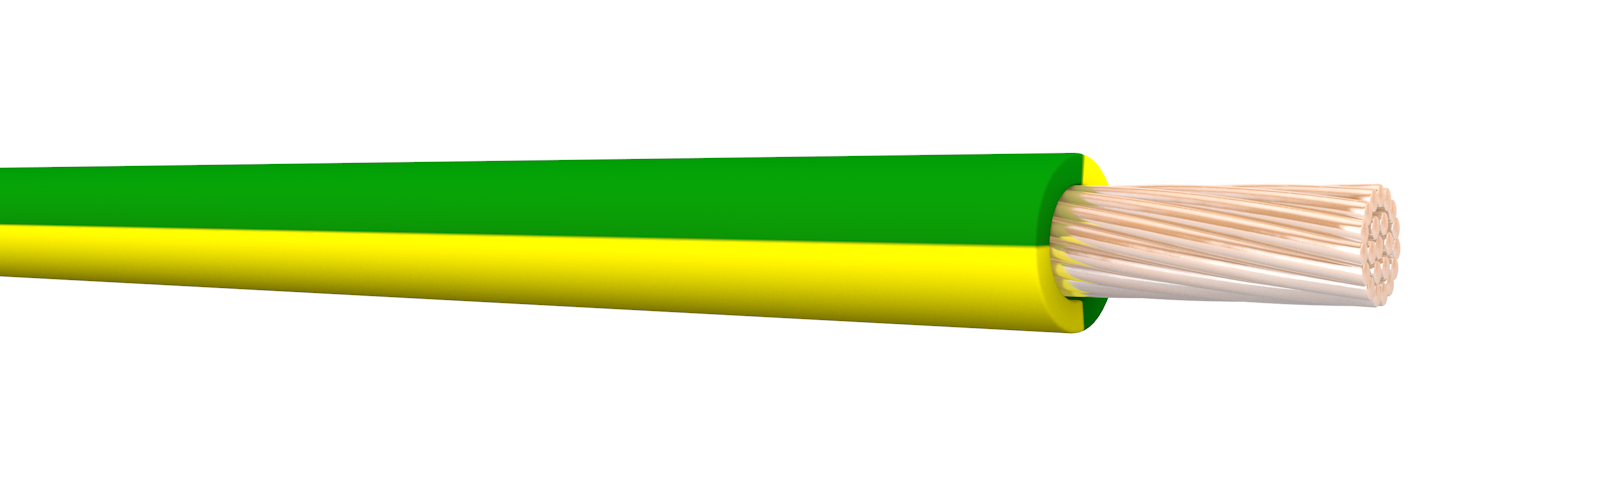 Prysmian 100 m 1.5 mm Conduit Cable Green/Yellow 6491B Includes VAT